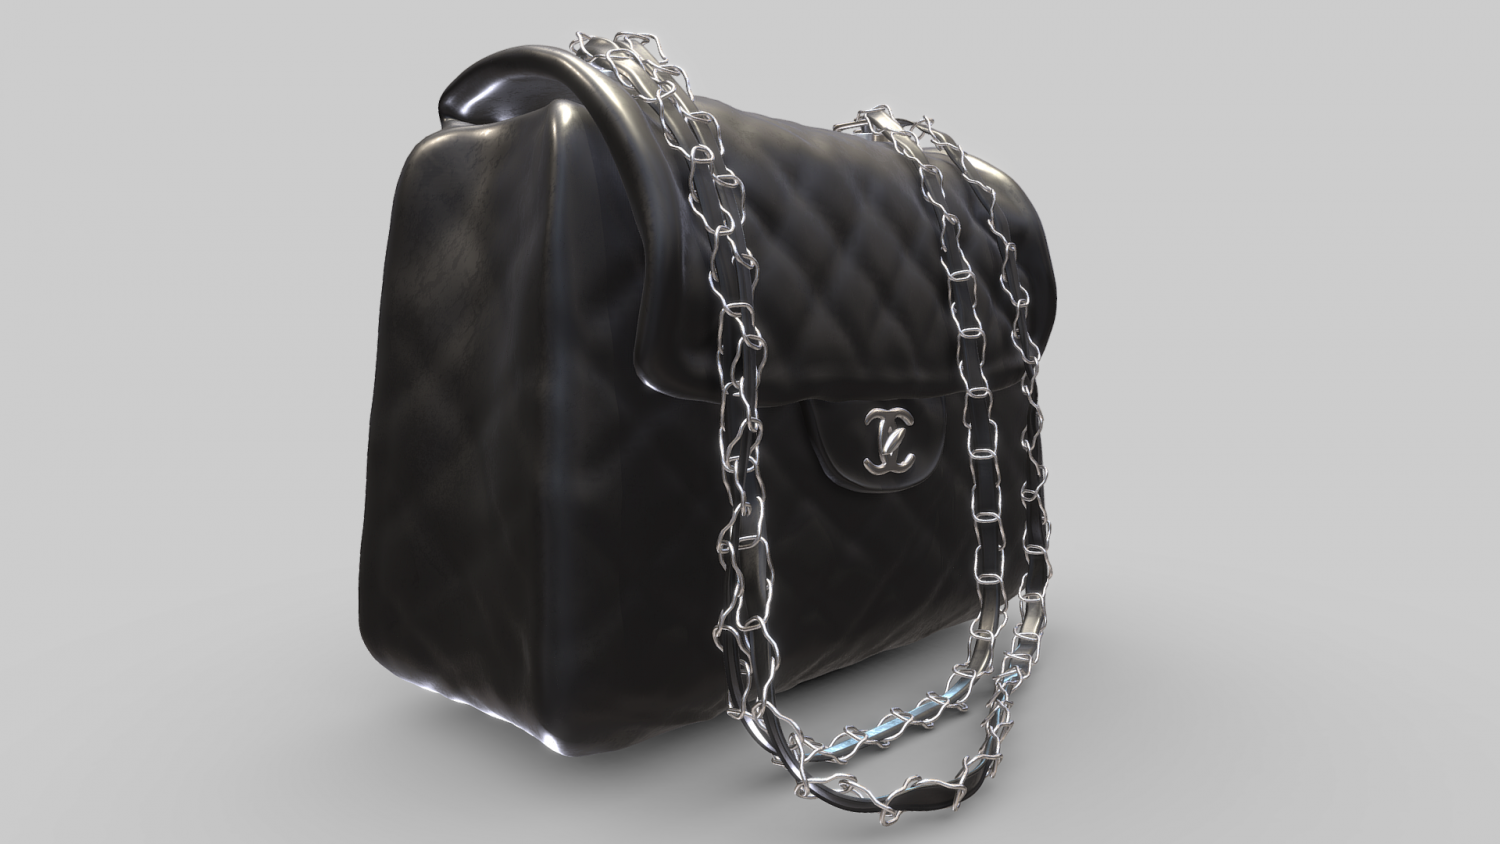 Download Chanel Flap Bag With Top Handle - Handbag PNG Image with